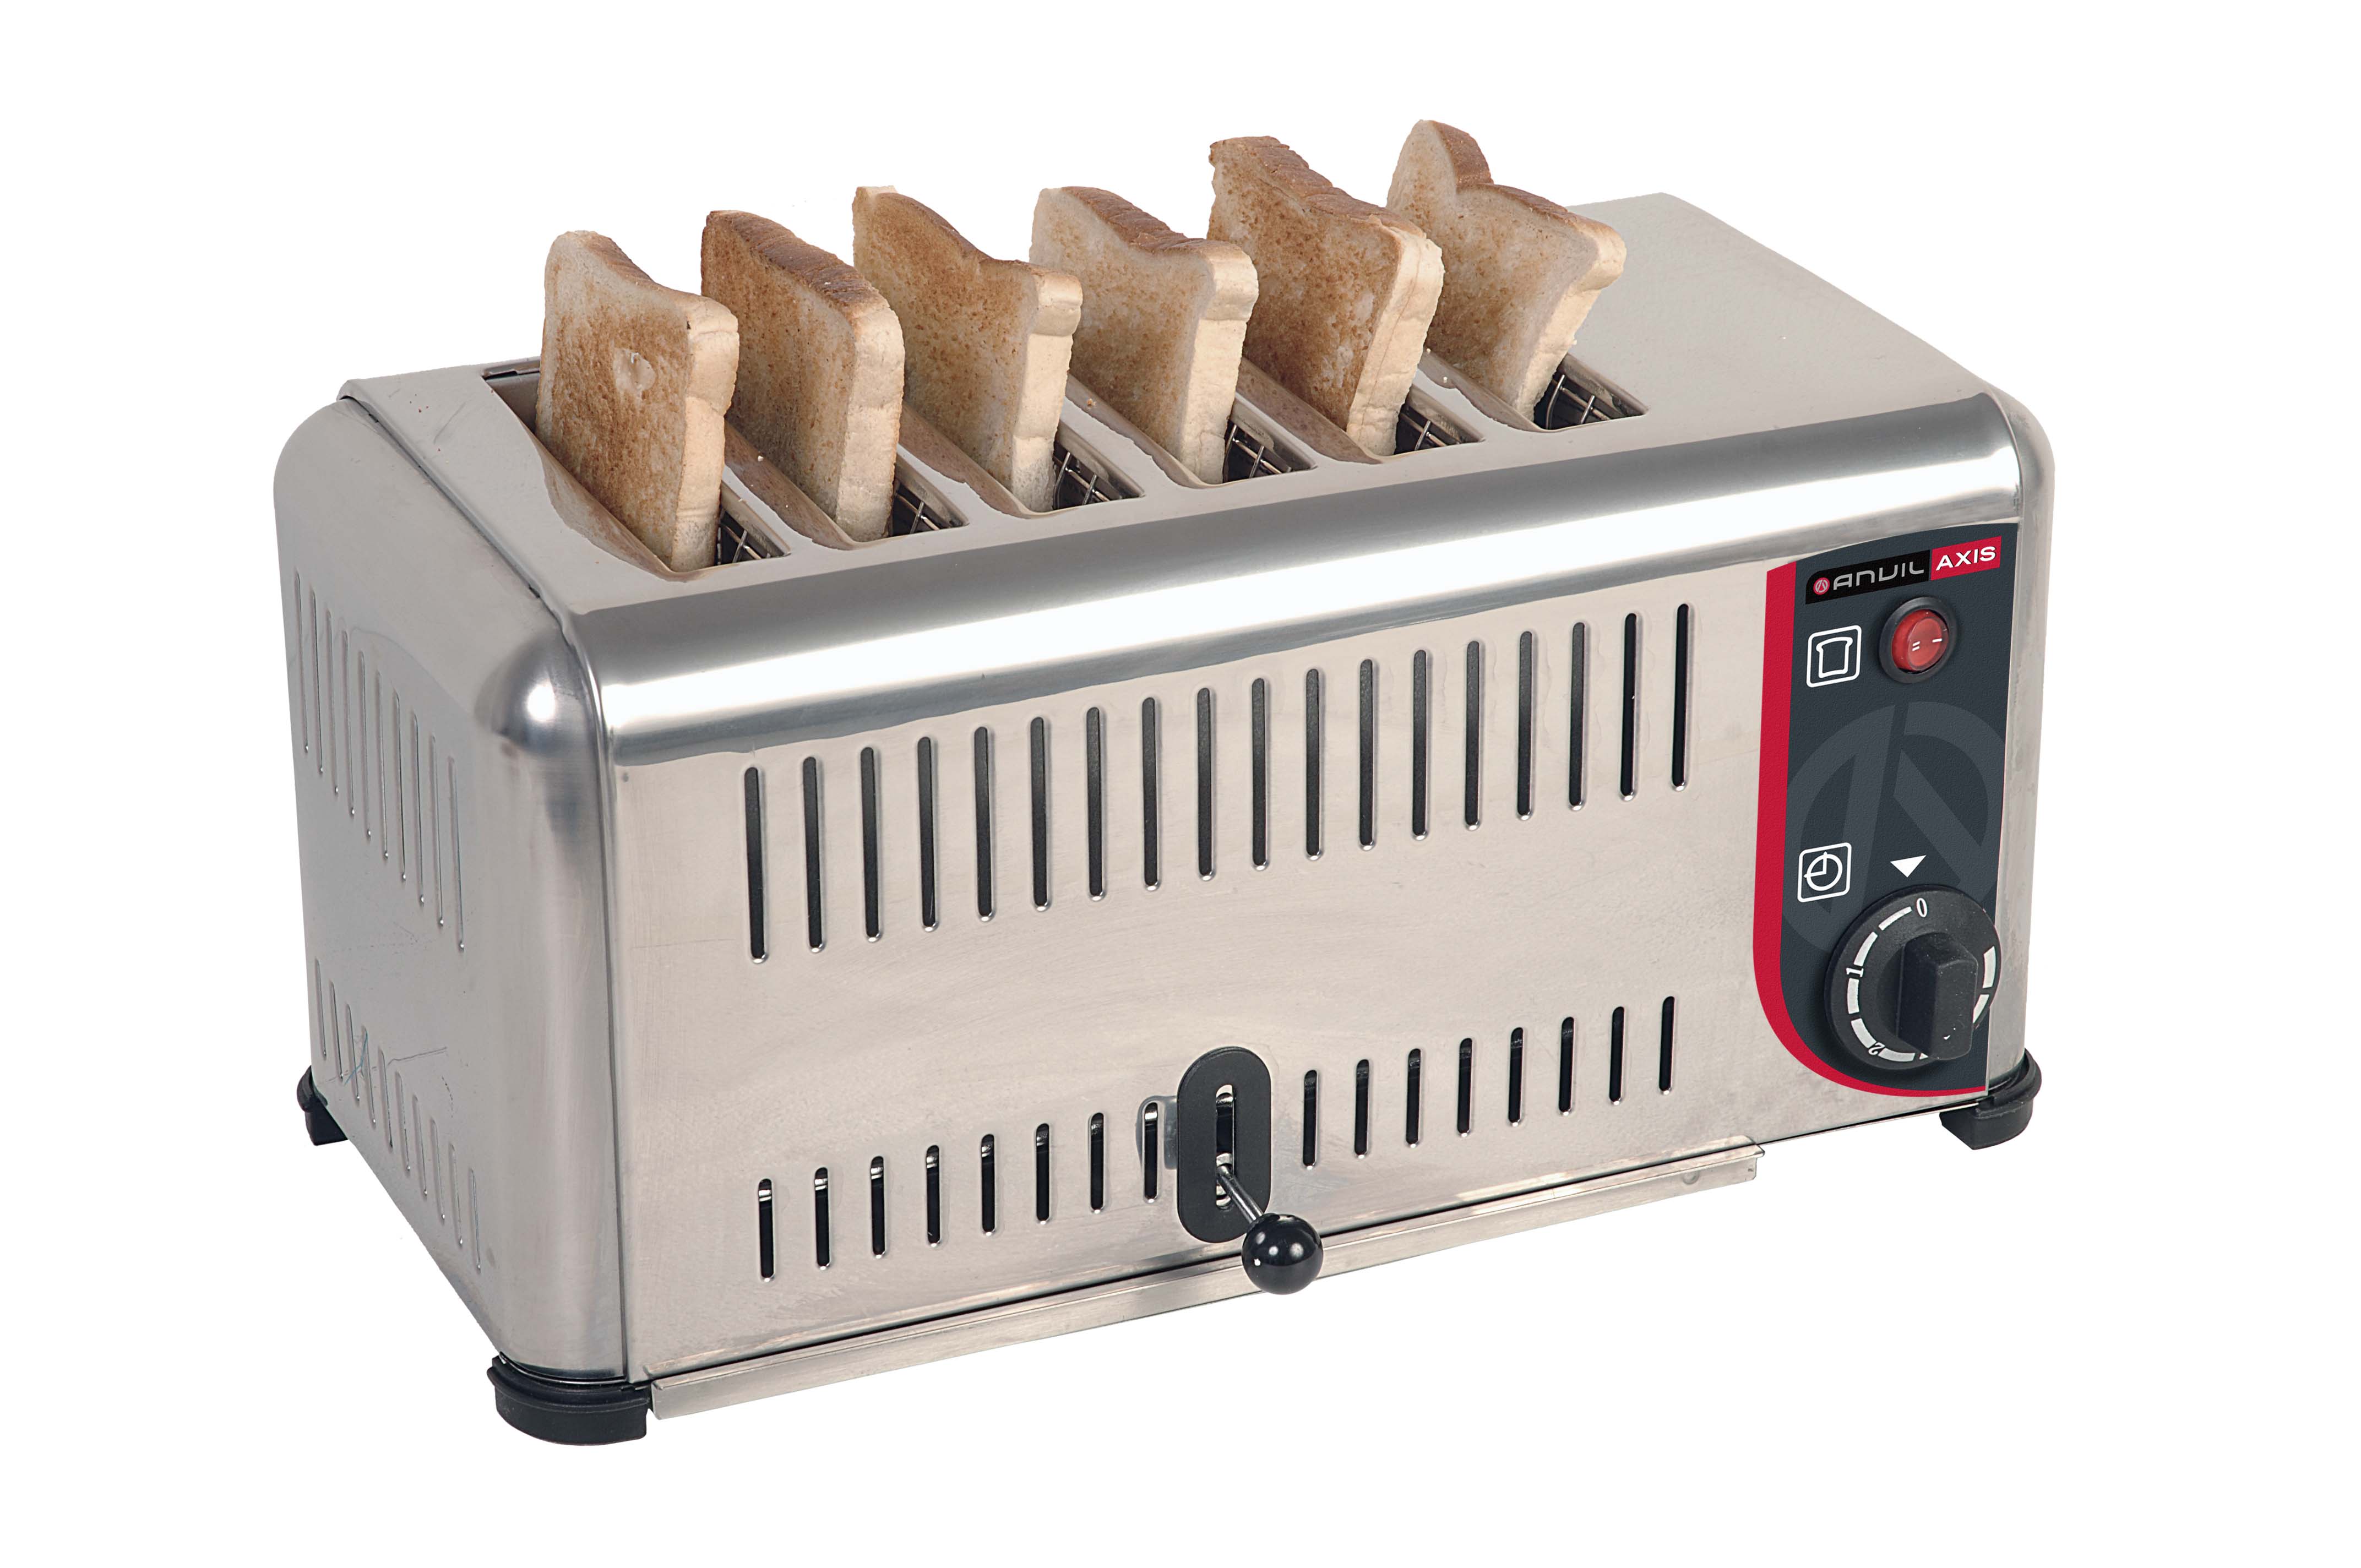 tsk0006--toaster-anvil-manual-lift--6-slice